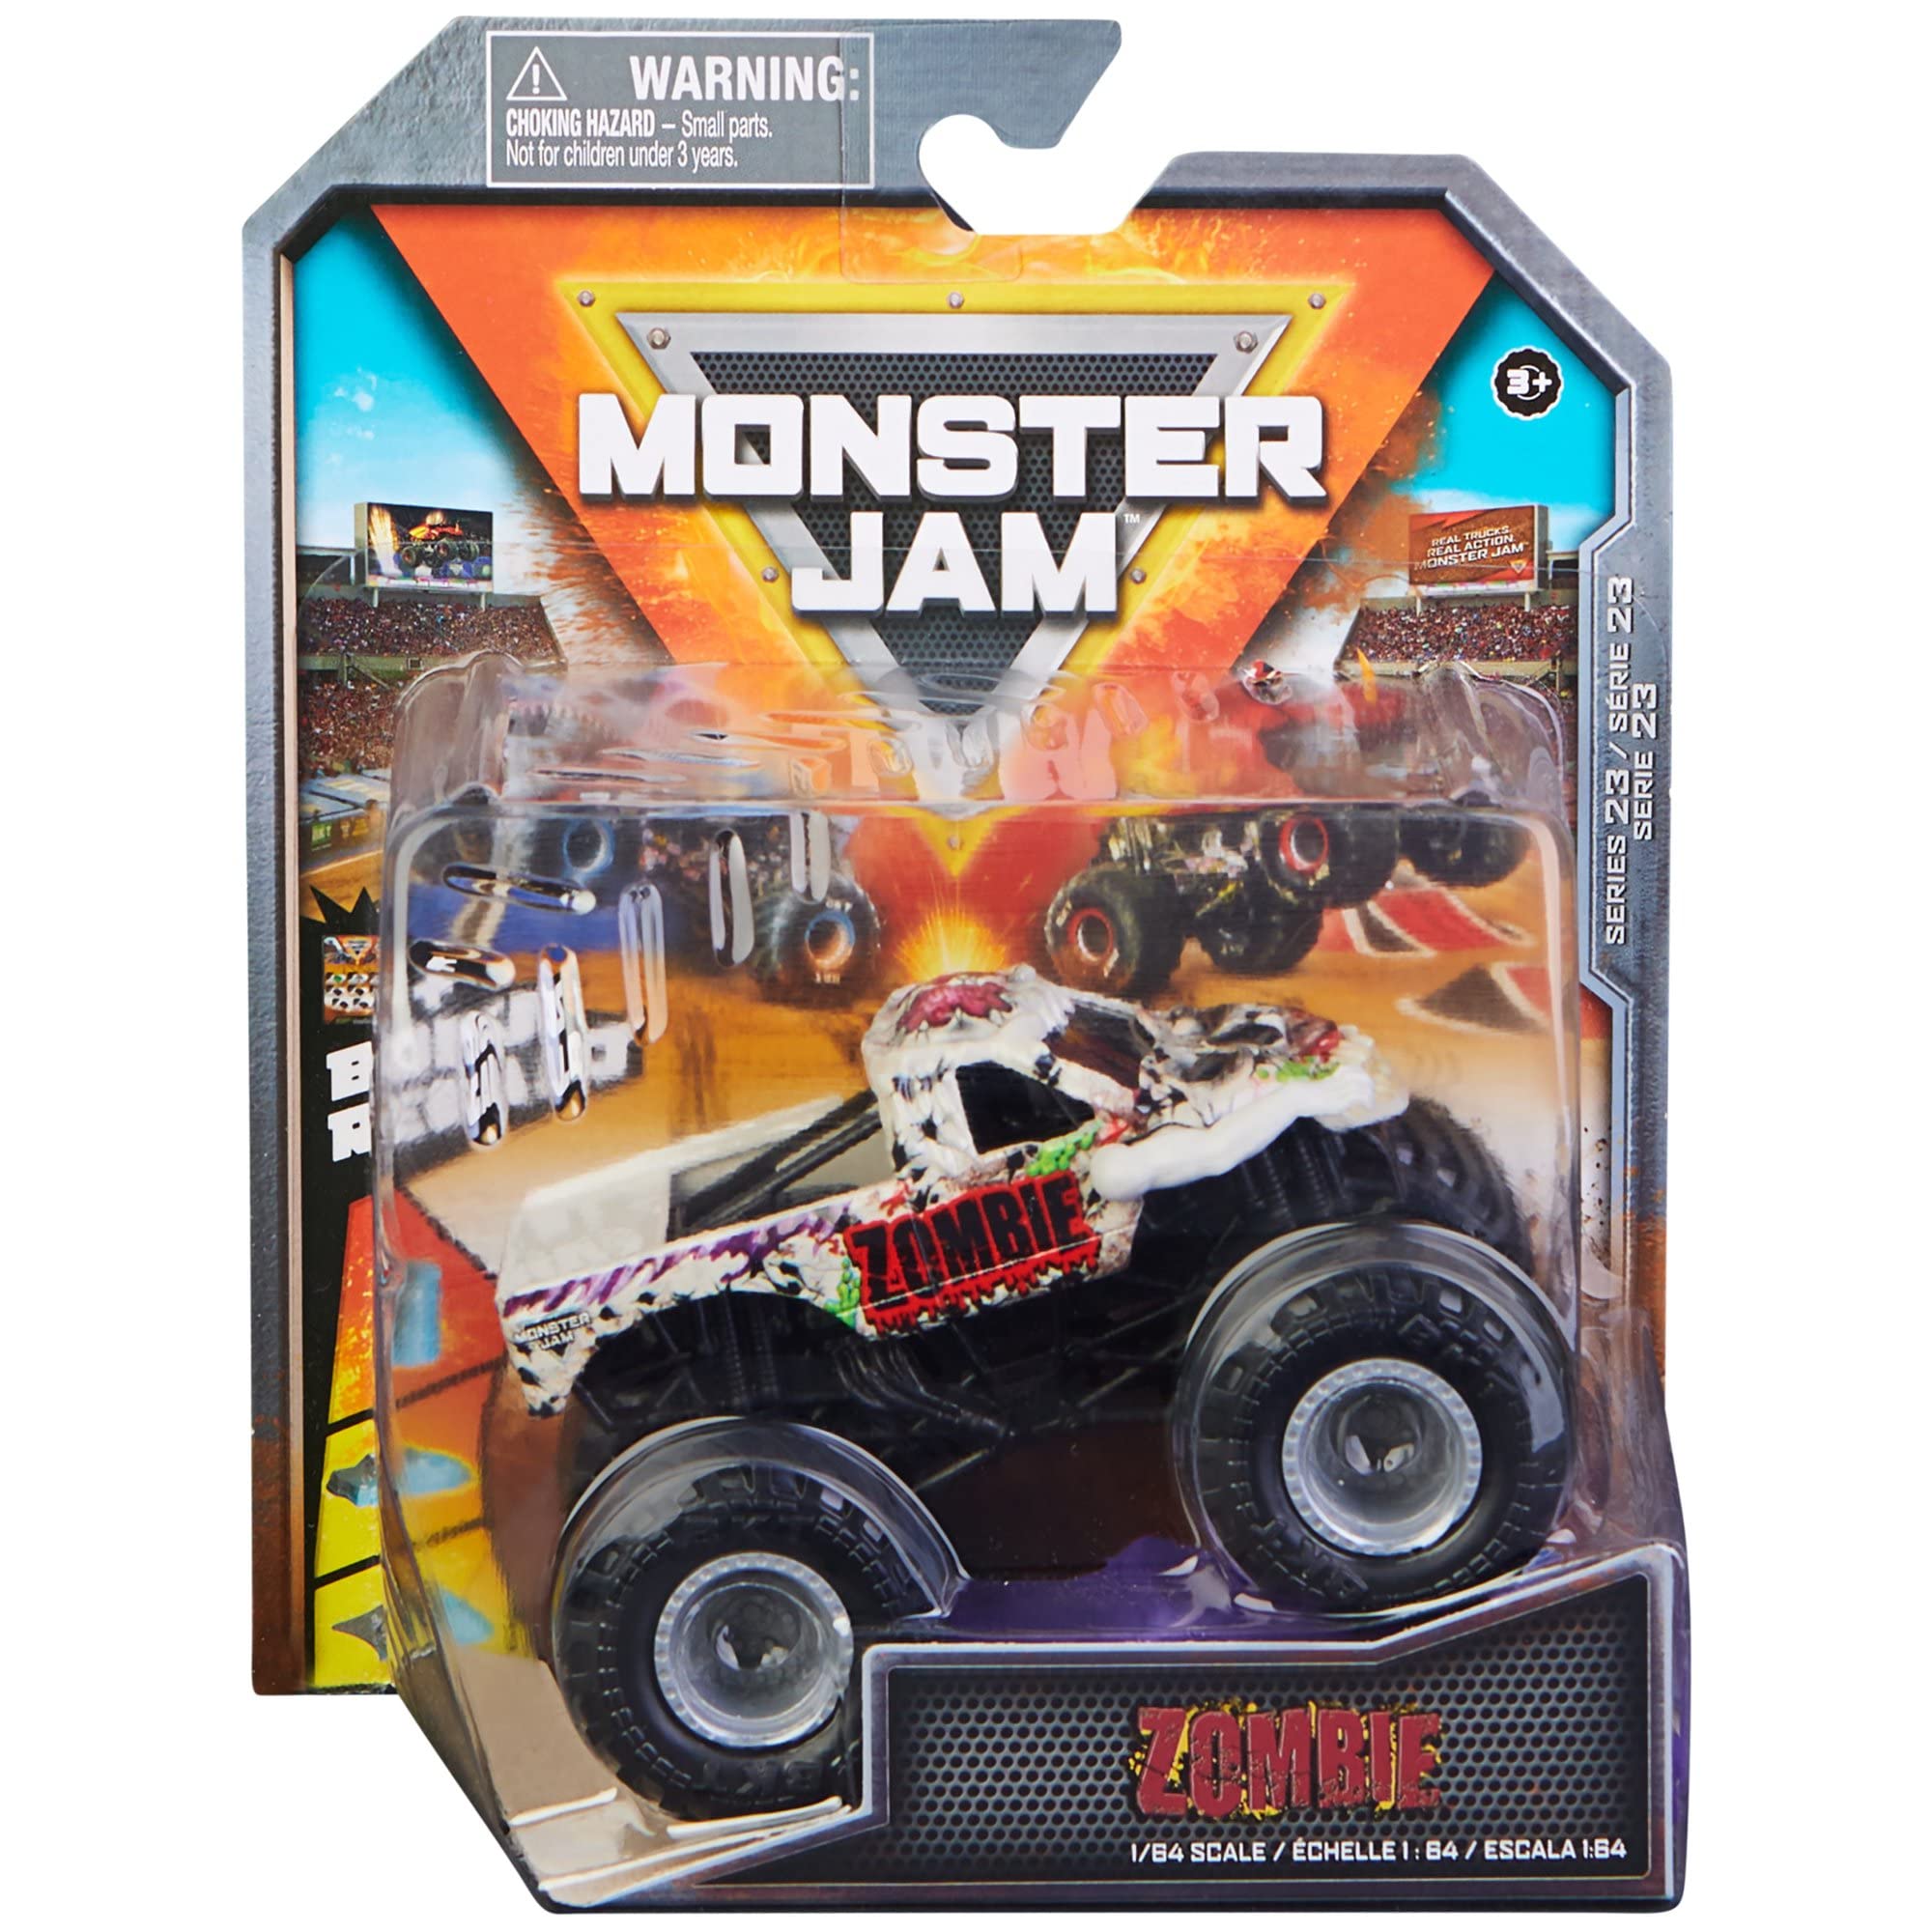 Zombie-wrex Hot Wheels Monster Trucks 2019